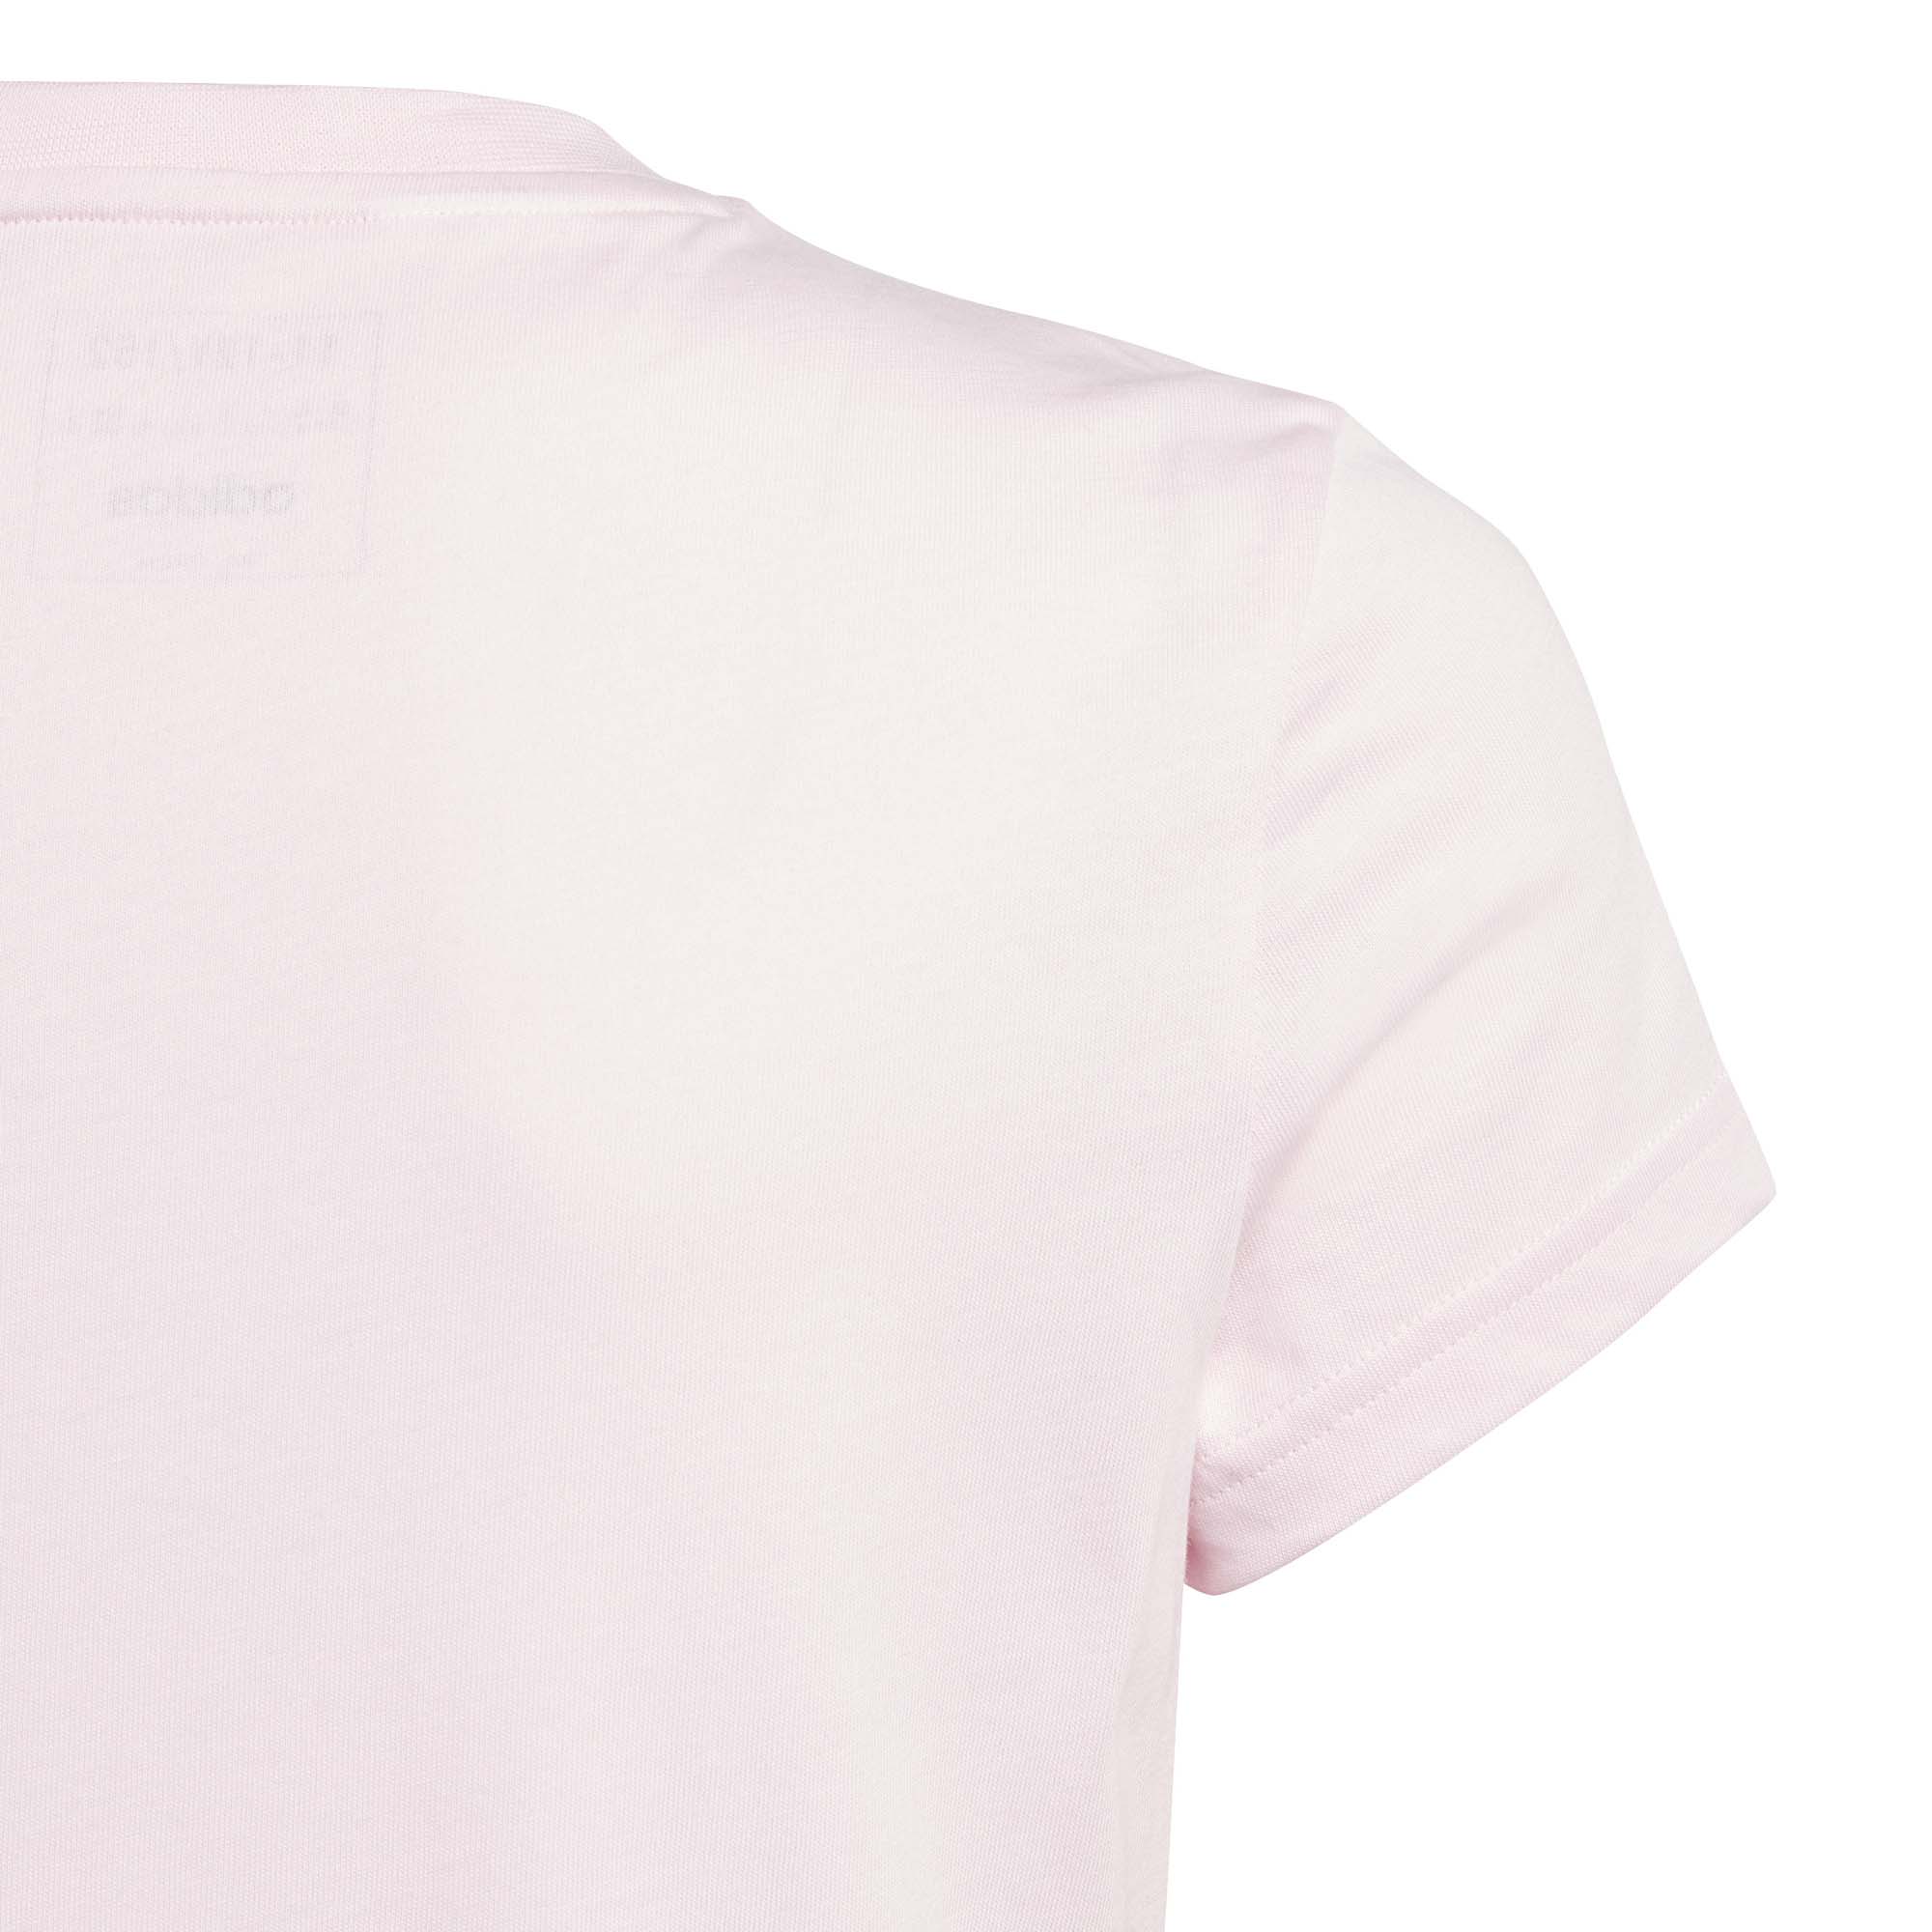 ADIDAS T-shirt Logo Roze  Meisjes